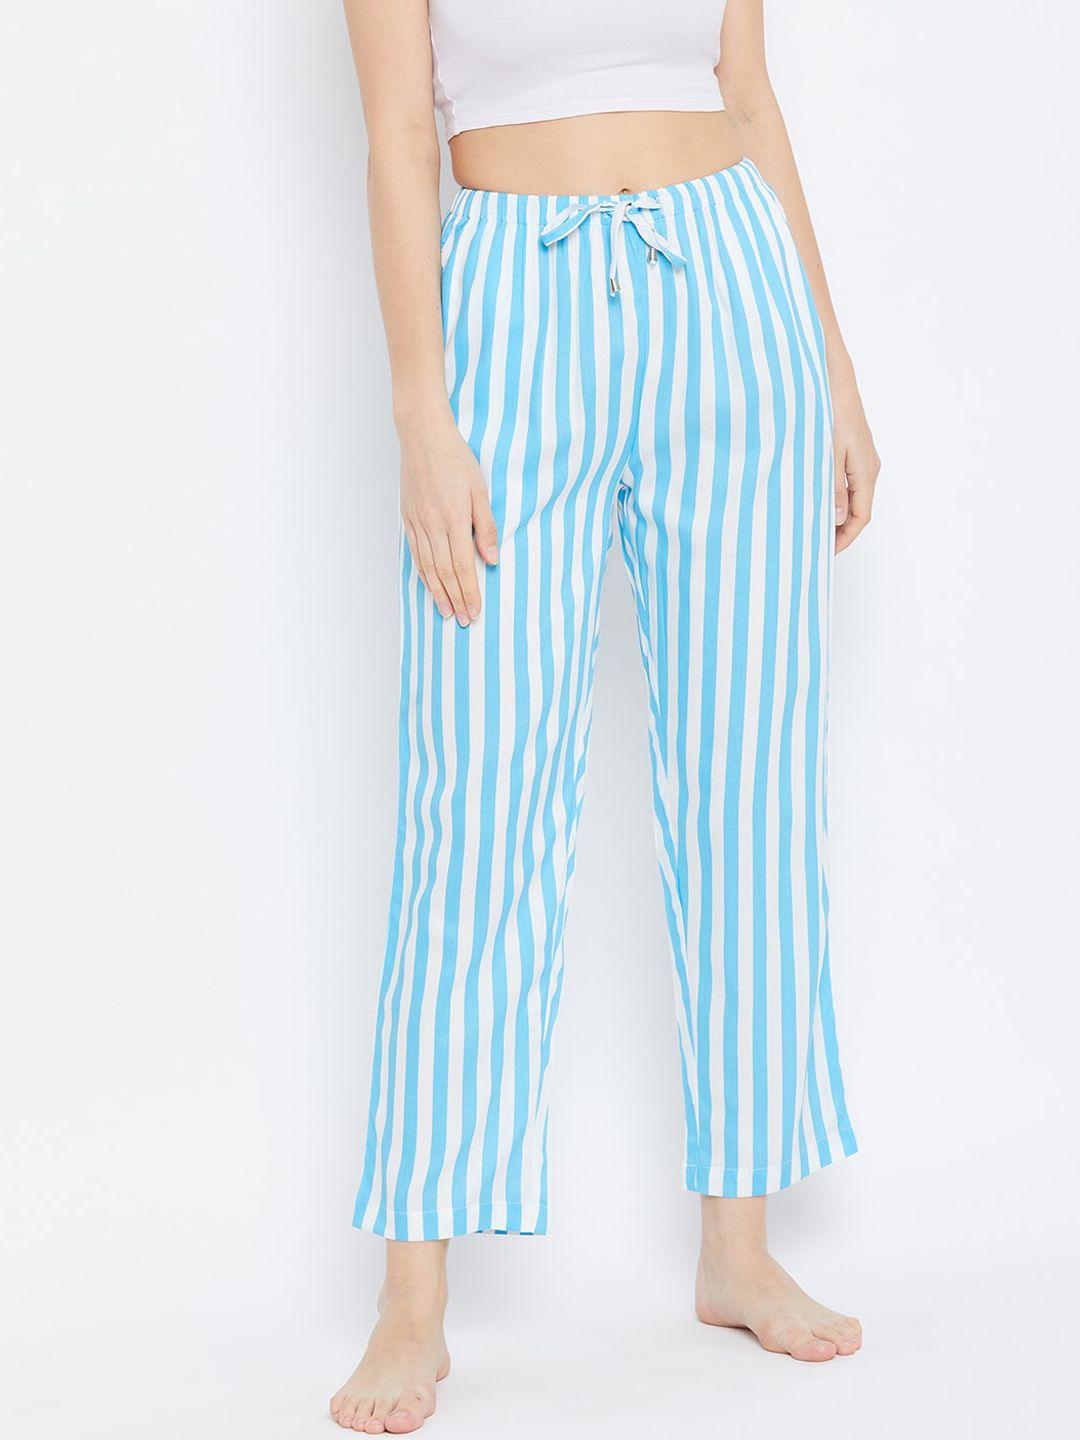 hypernation women turquoise blue & white striped lounge pants